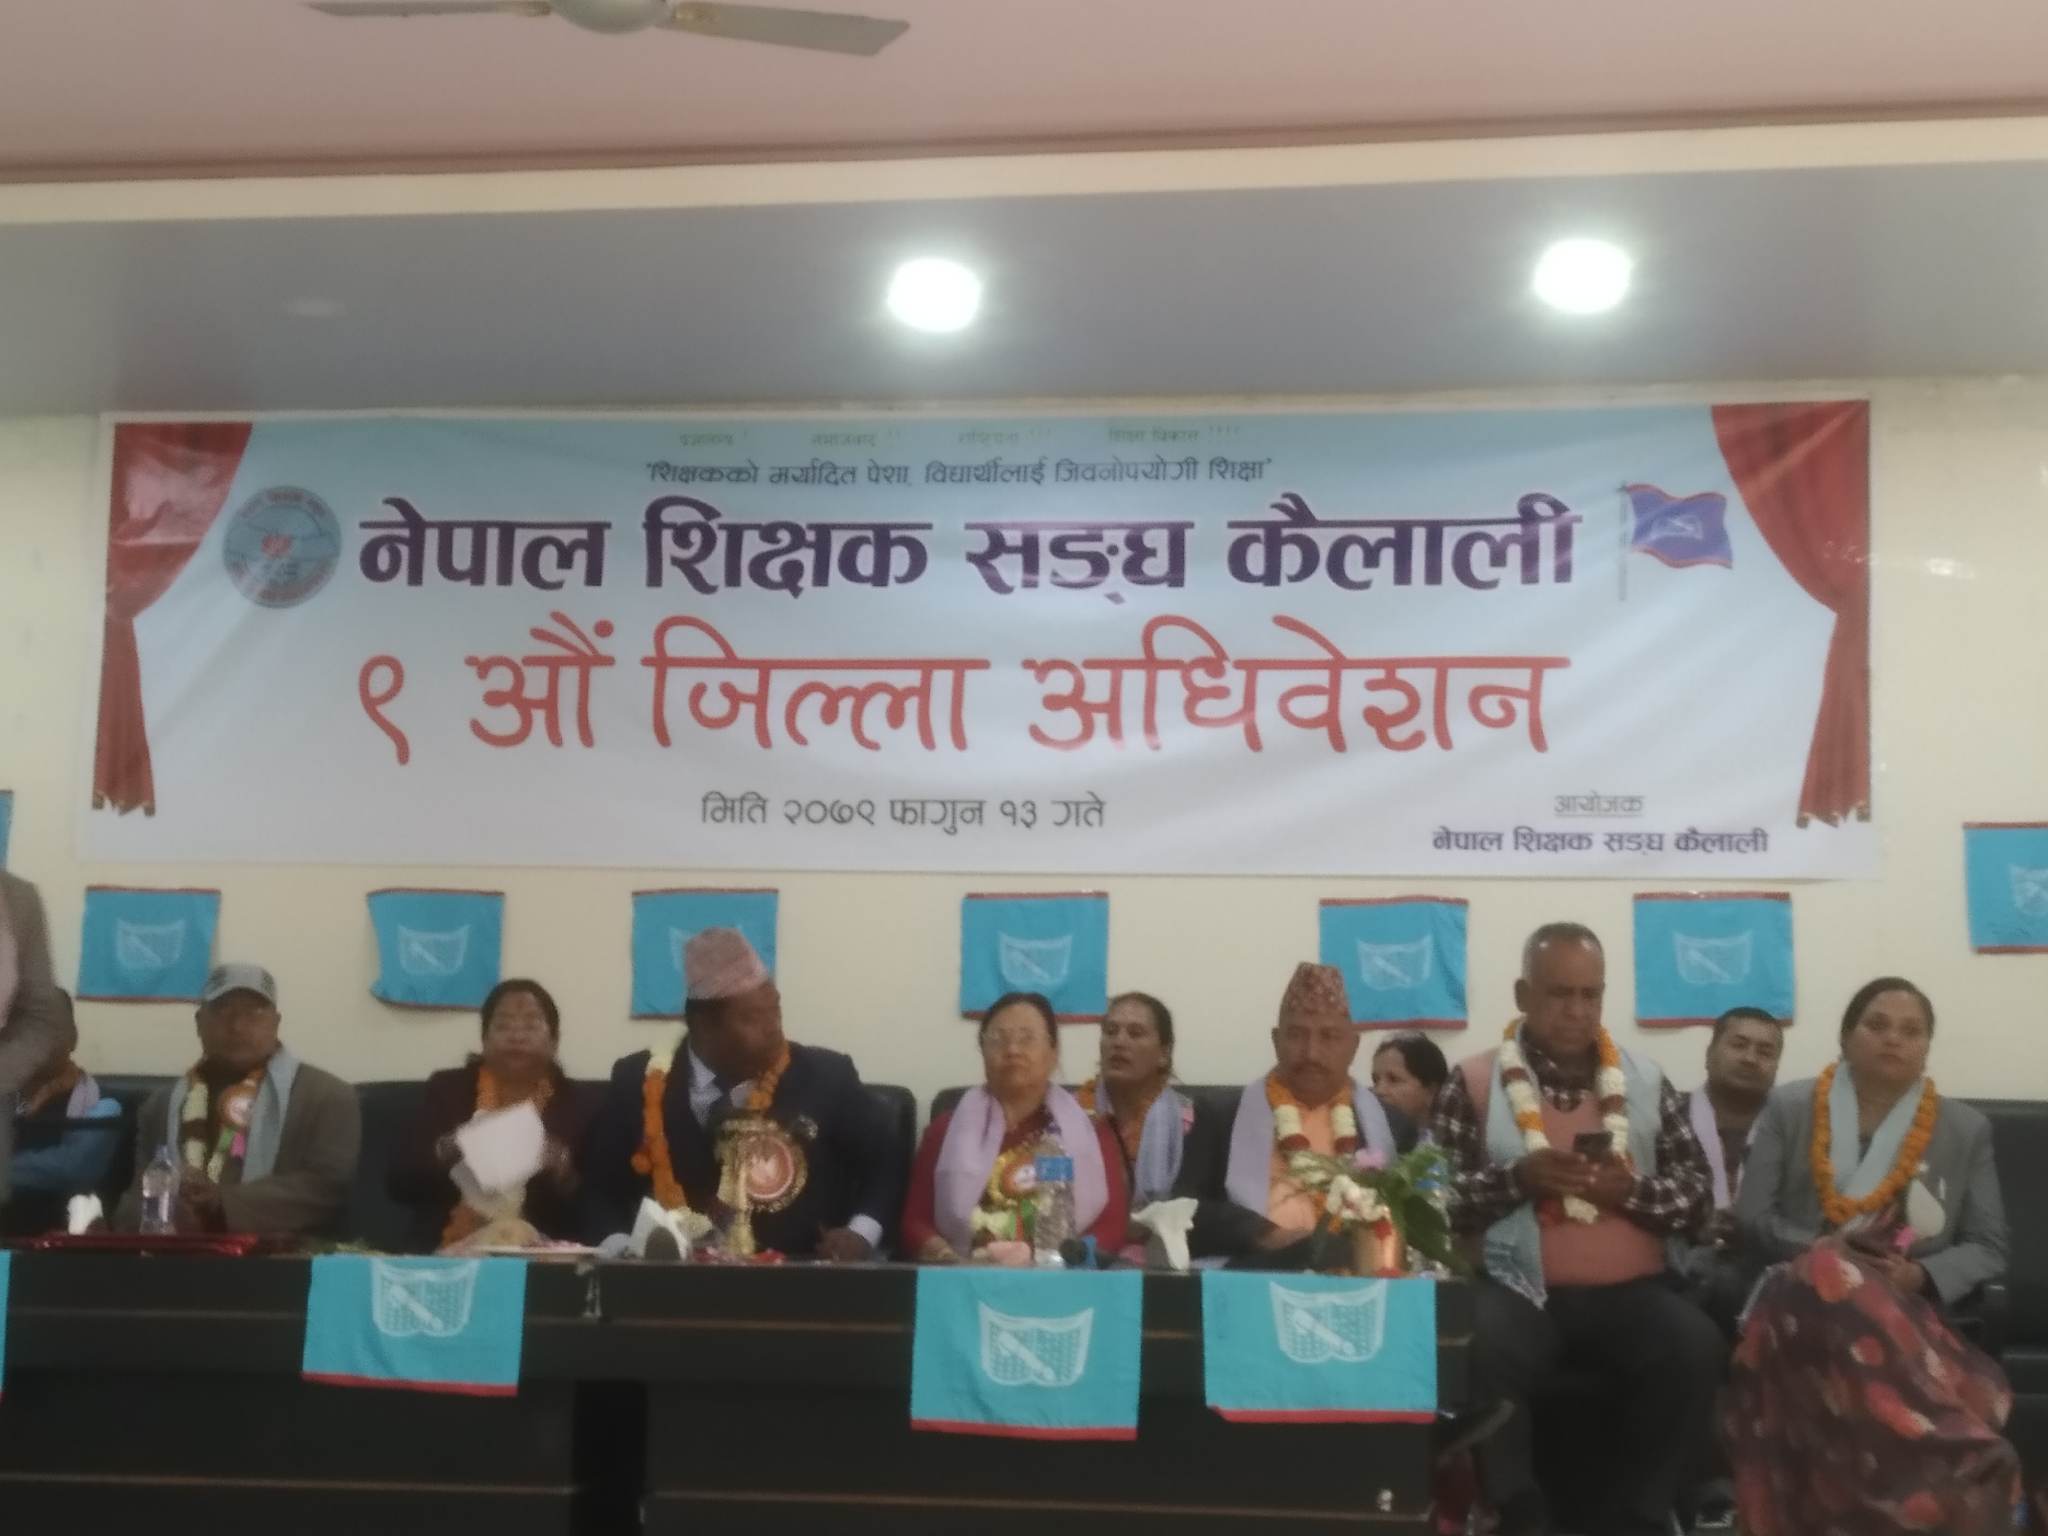 नेपाल शिक्षक संघ कैलालीको नवौं जिल्ला अधिवेशन धनगढीमा शुरू